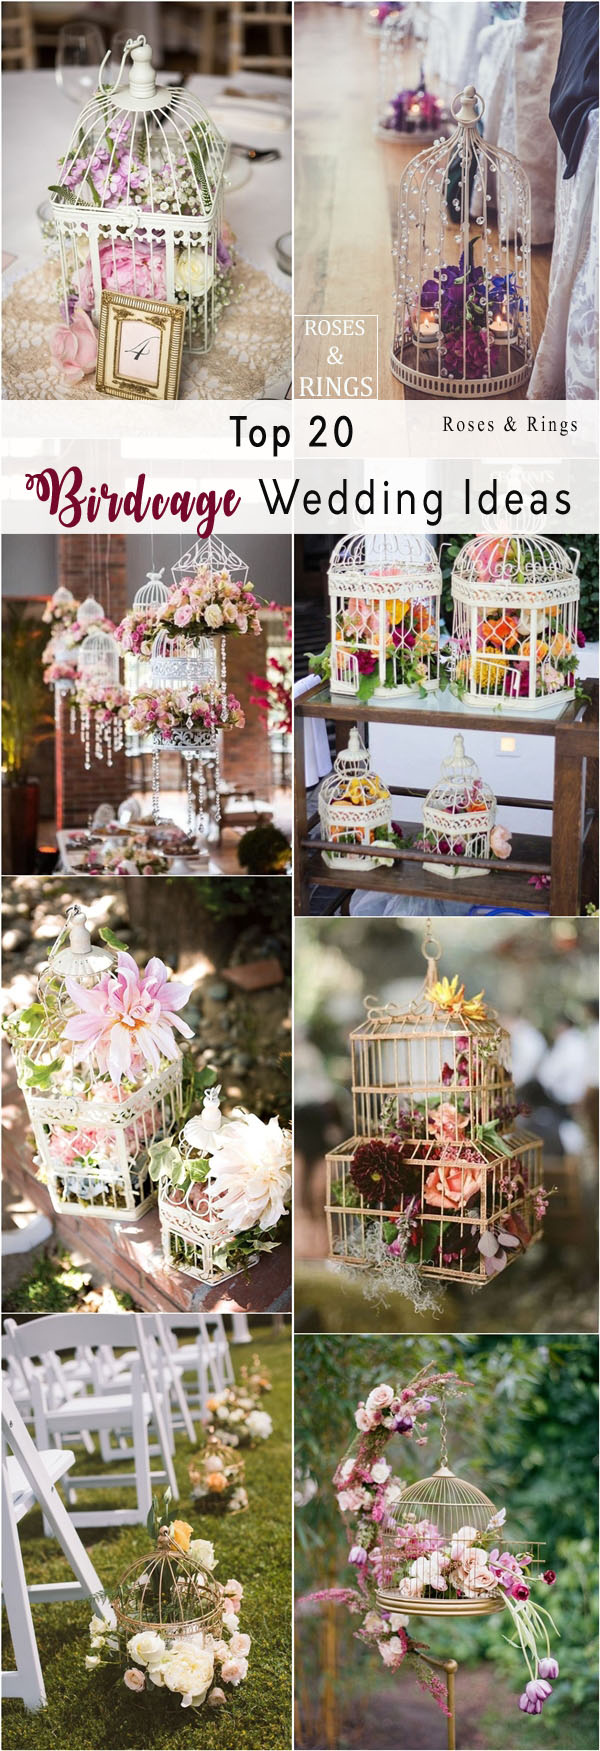 vintage wedding ideas - birdcage wedding ideas